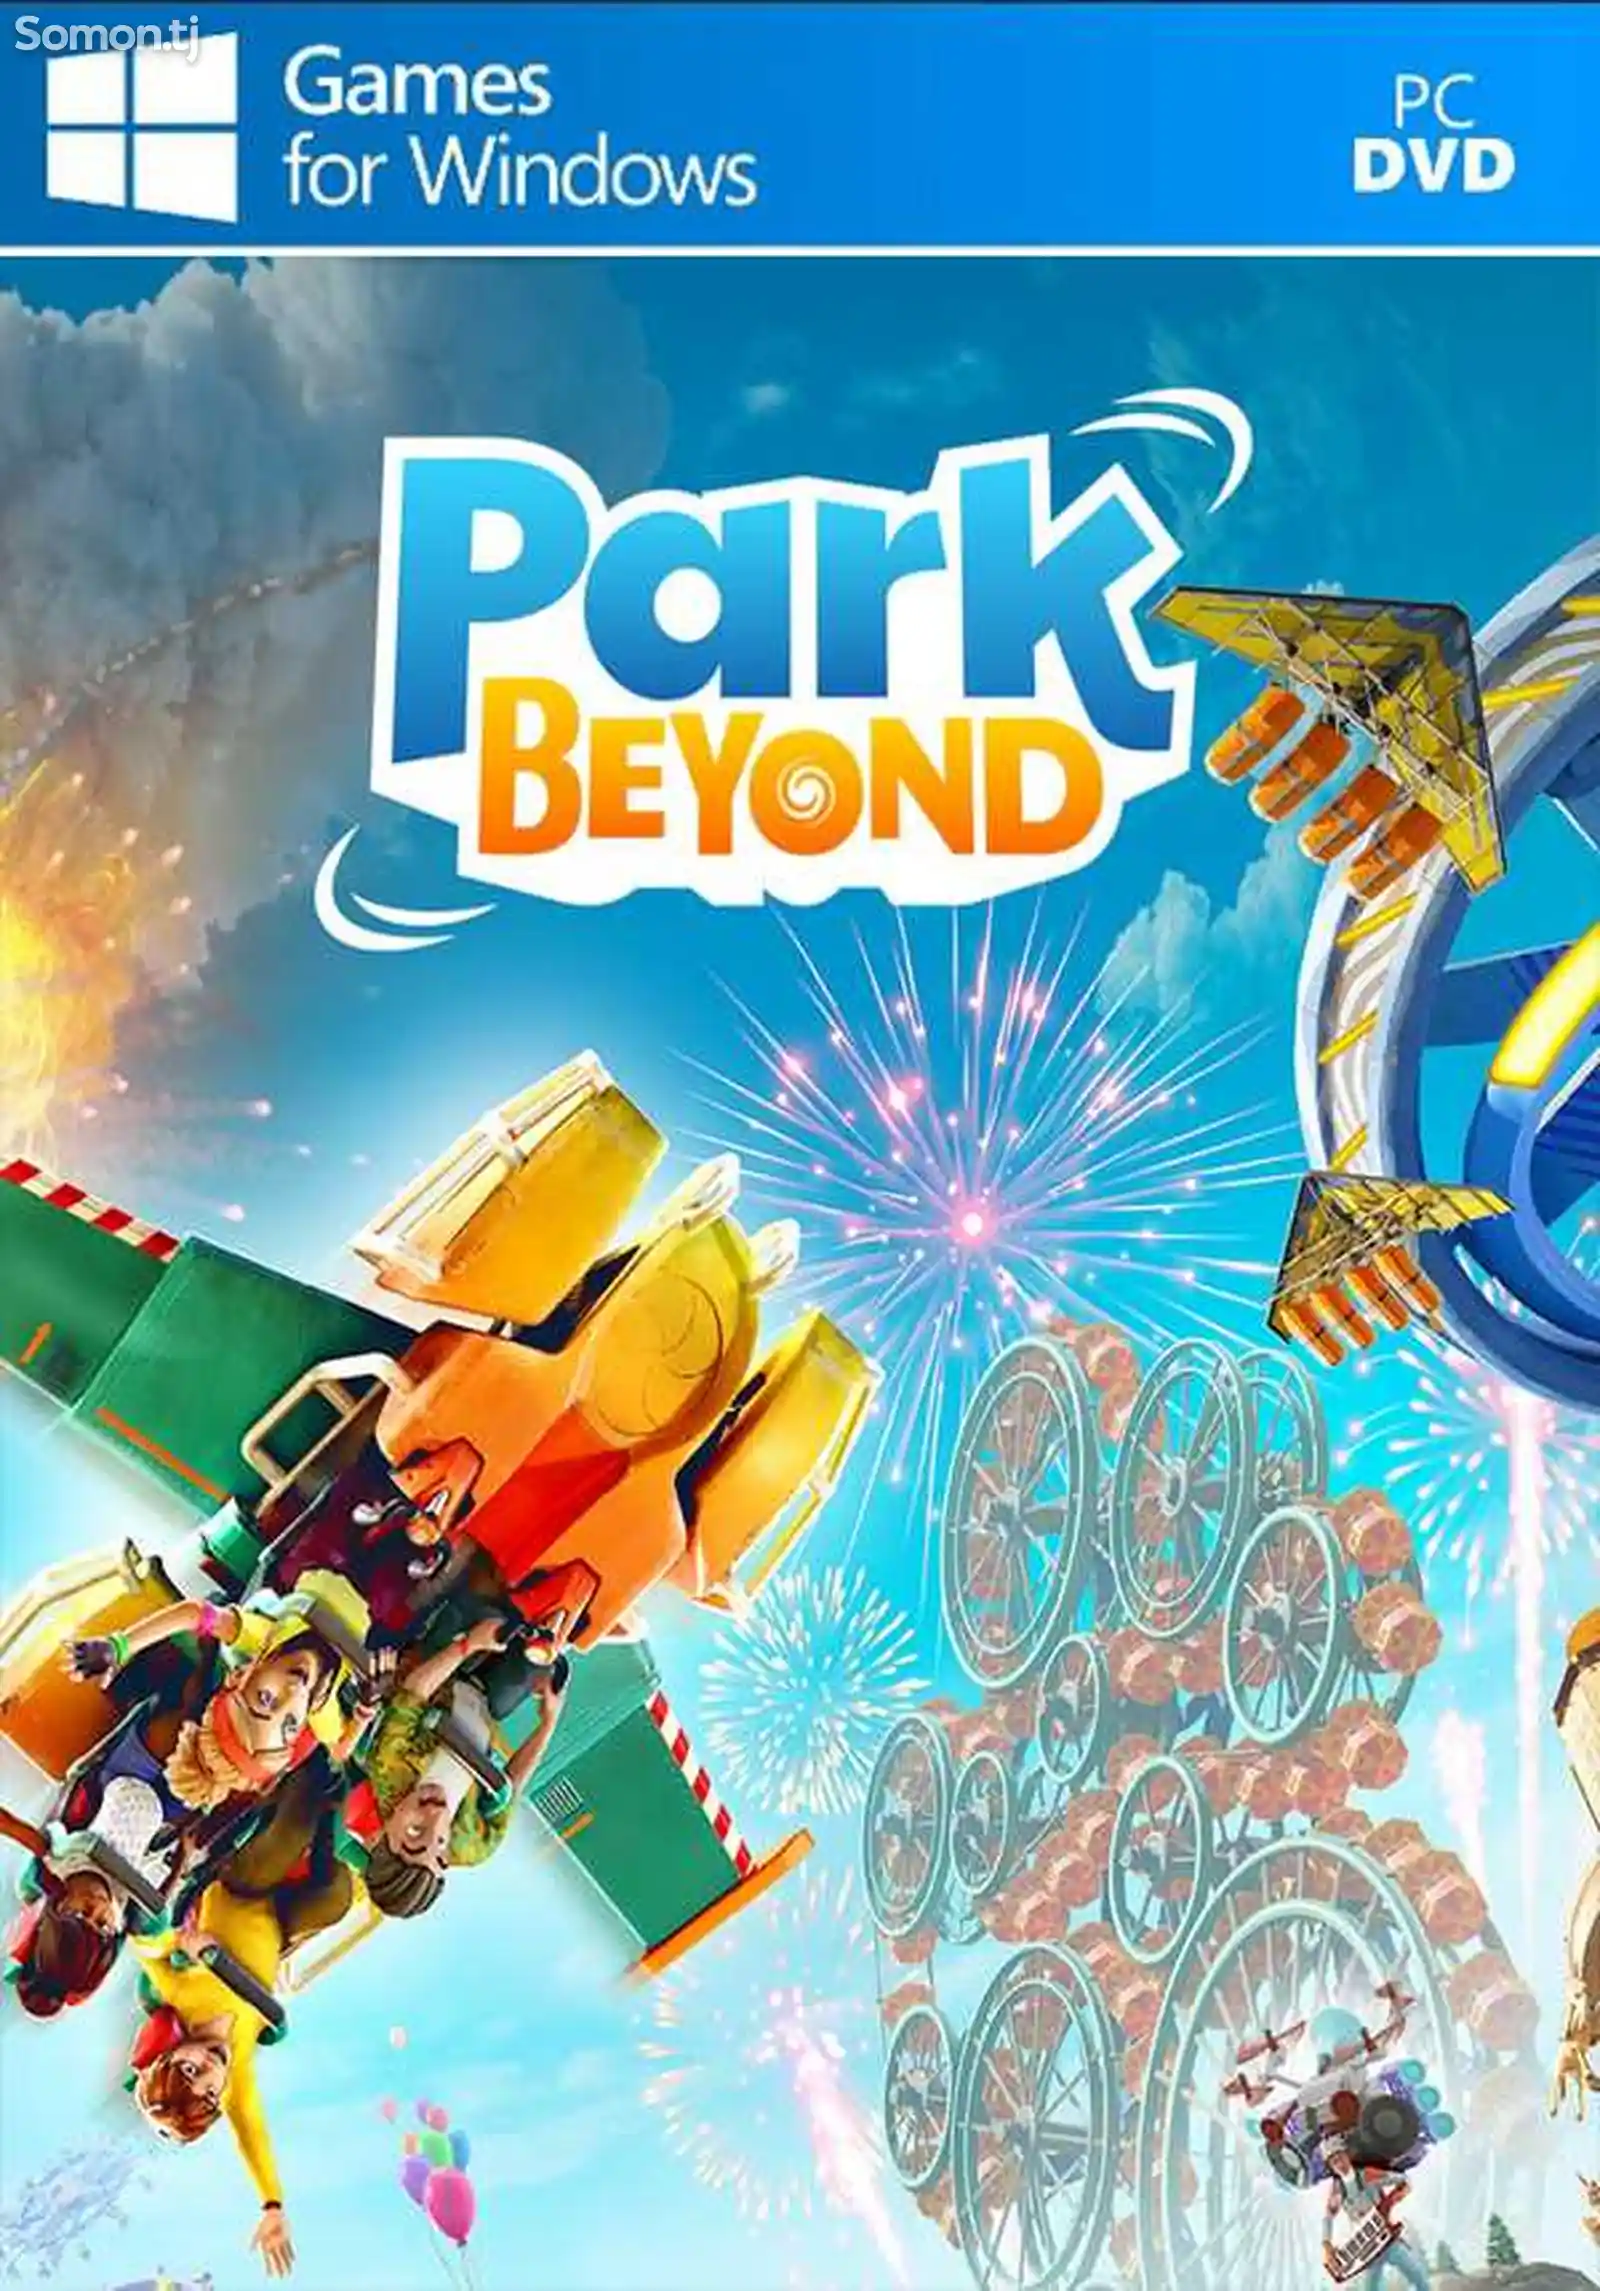 Игра Park beyond для компьютера-пк-pc-1